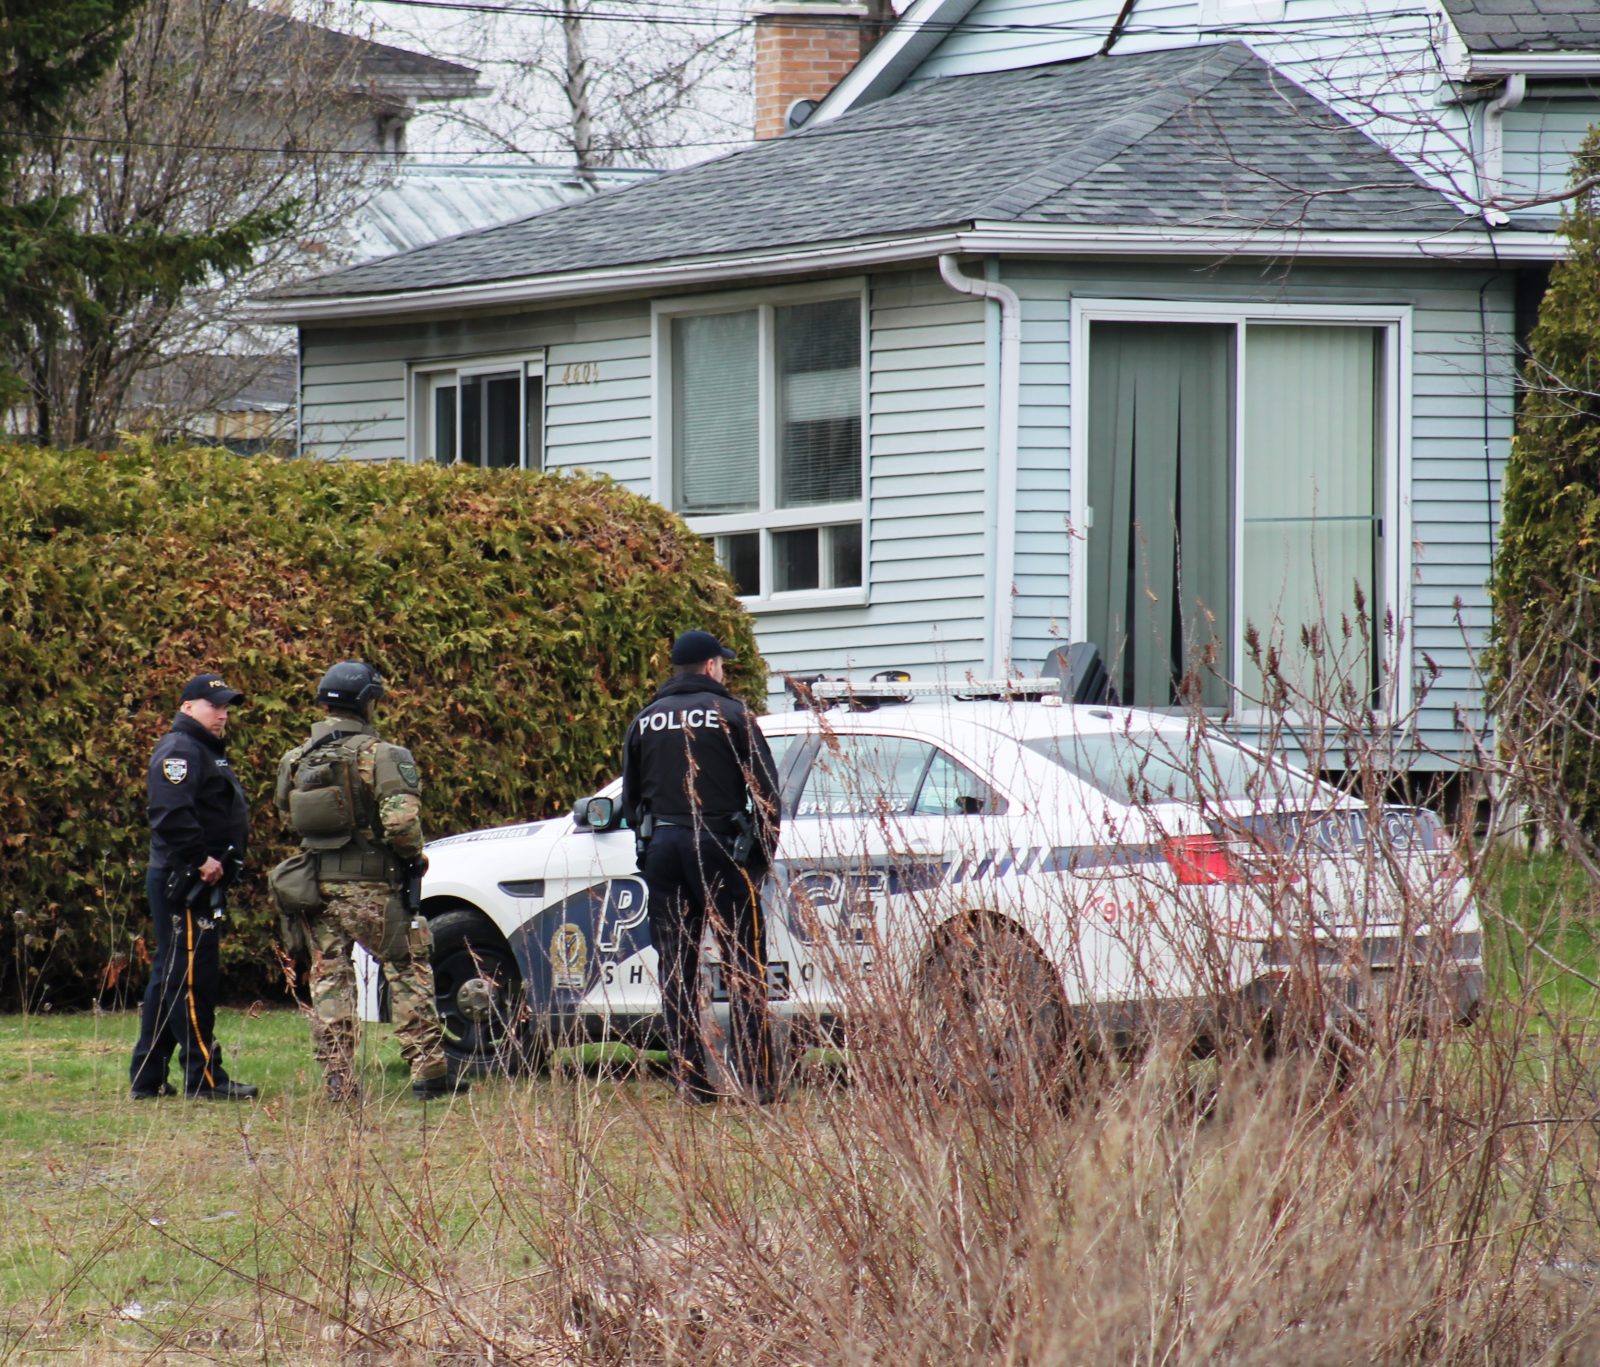 Barricaded man surrenders peacefully in Sherbrooke